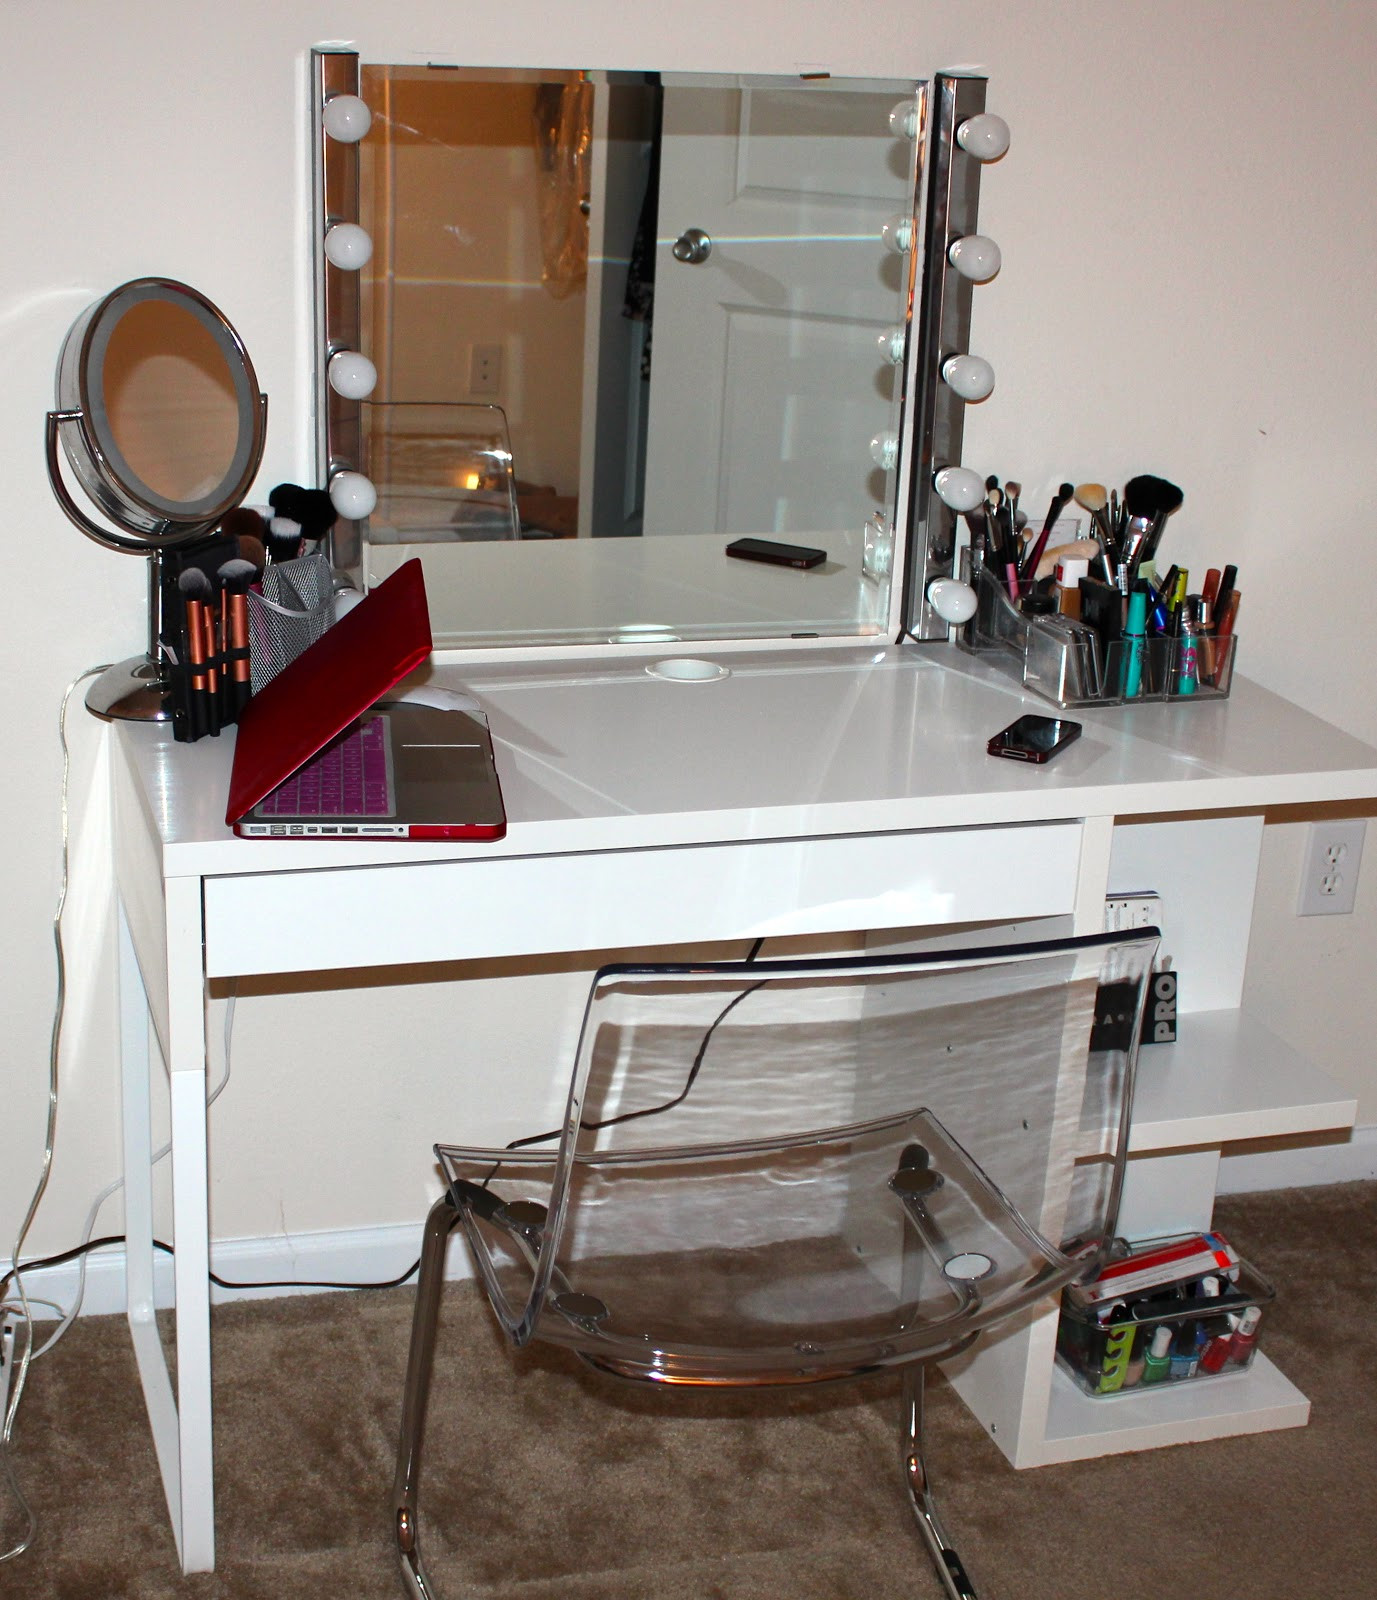 Best ideas about DIY Vanity Desk
. Save or Pin LekiaLPTBeauty Weekend Project DIY Vanity Desk Now.